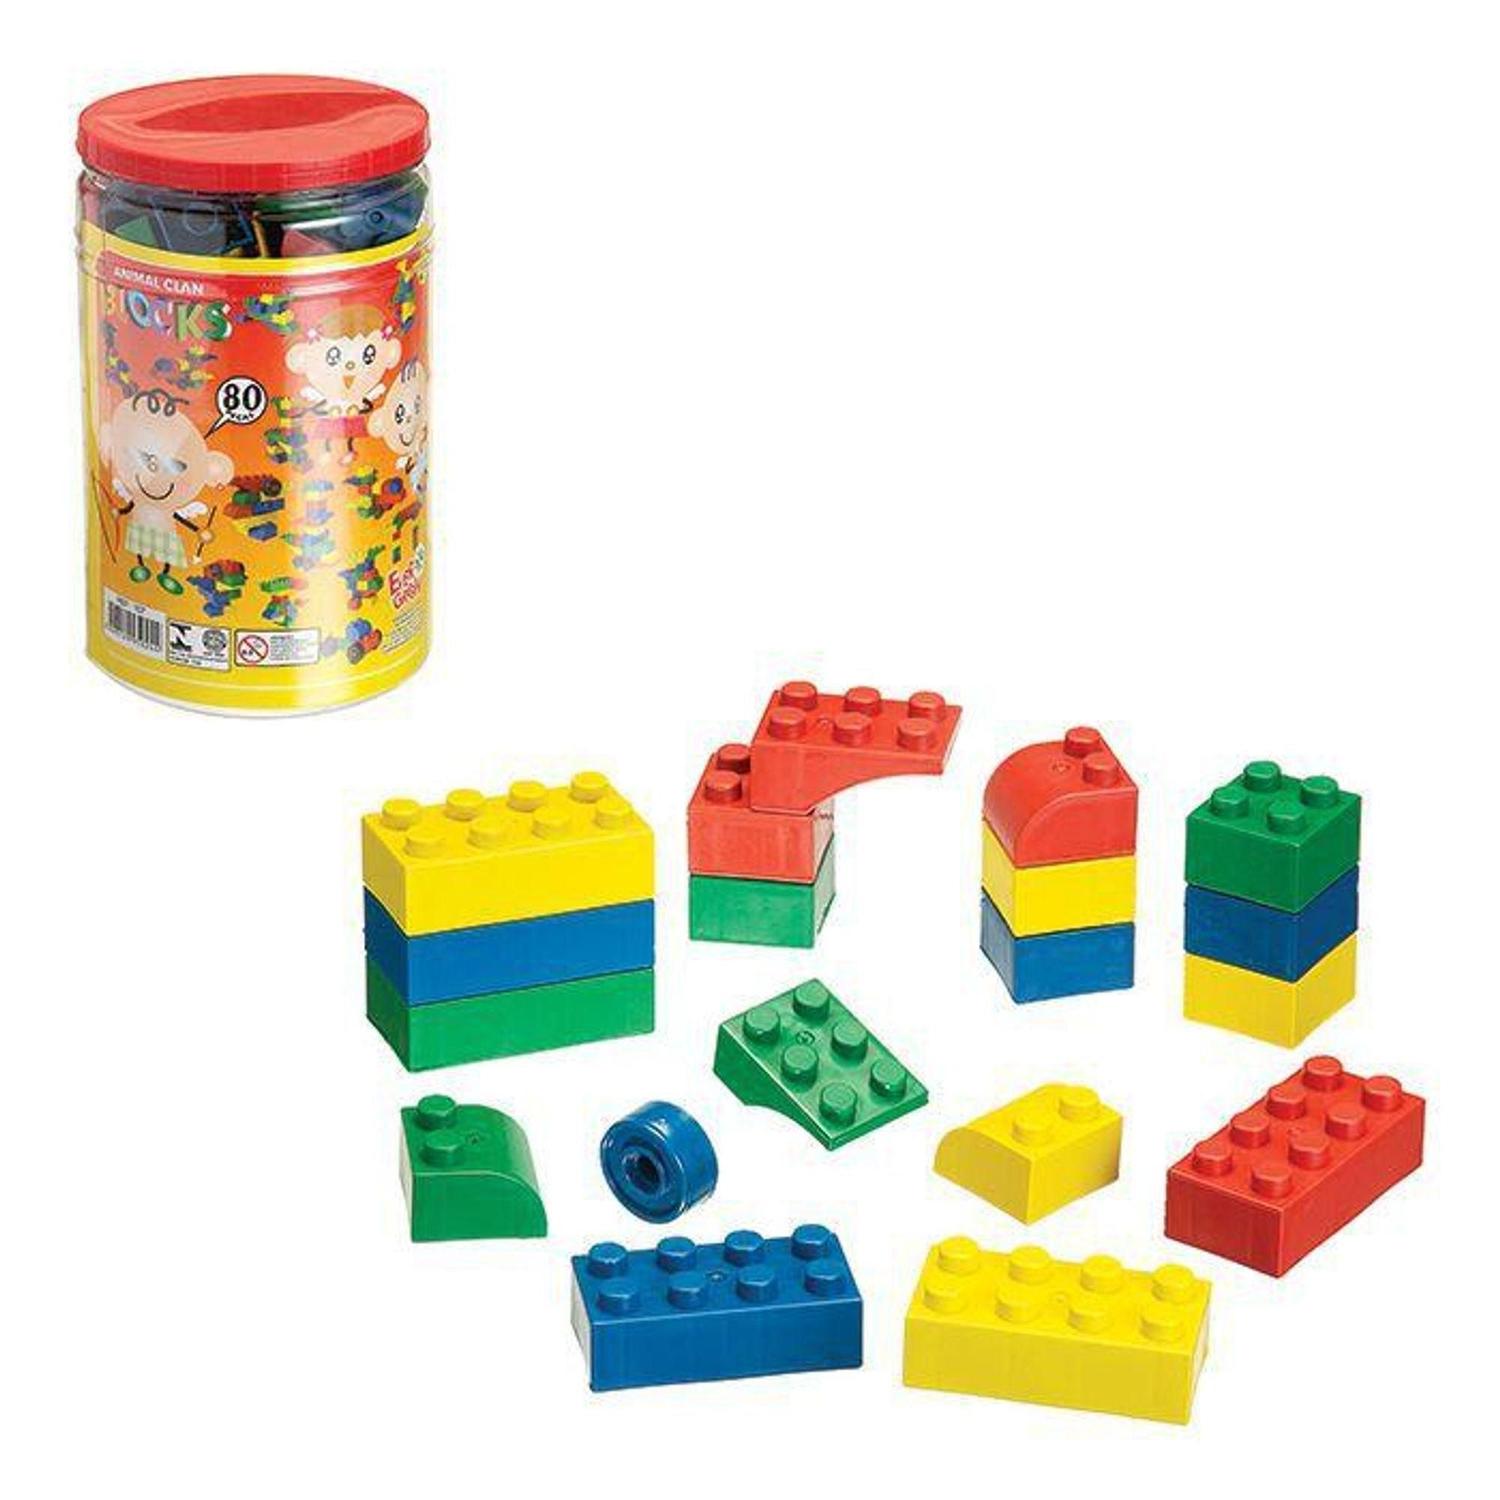 Lego Pote Com Blocos De Montar